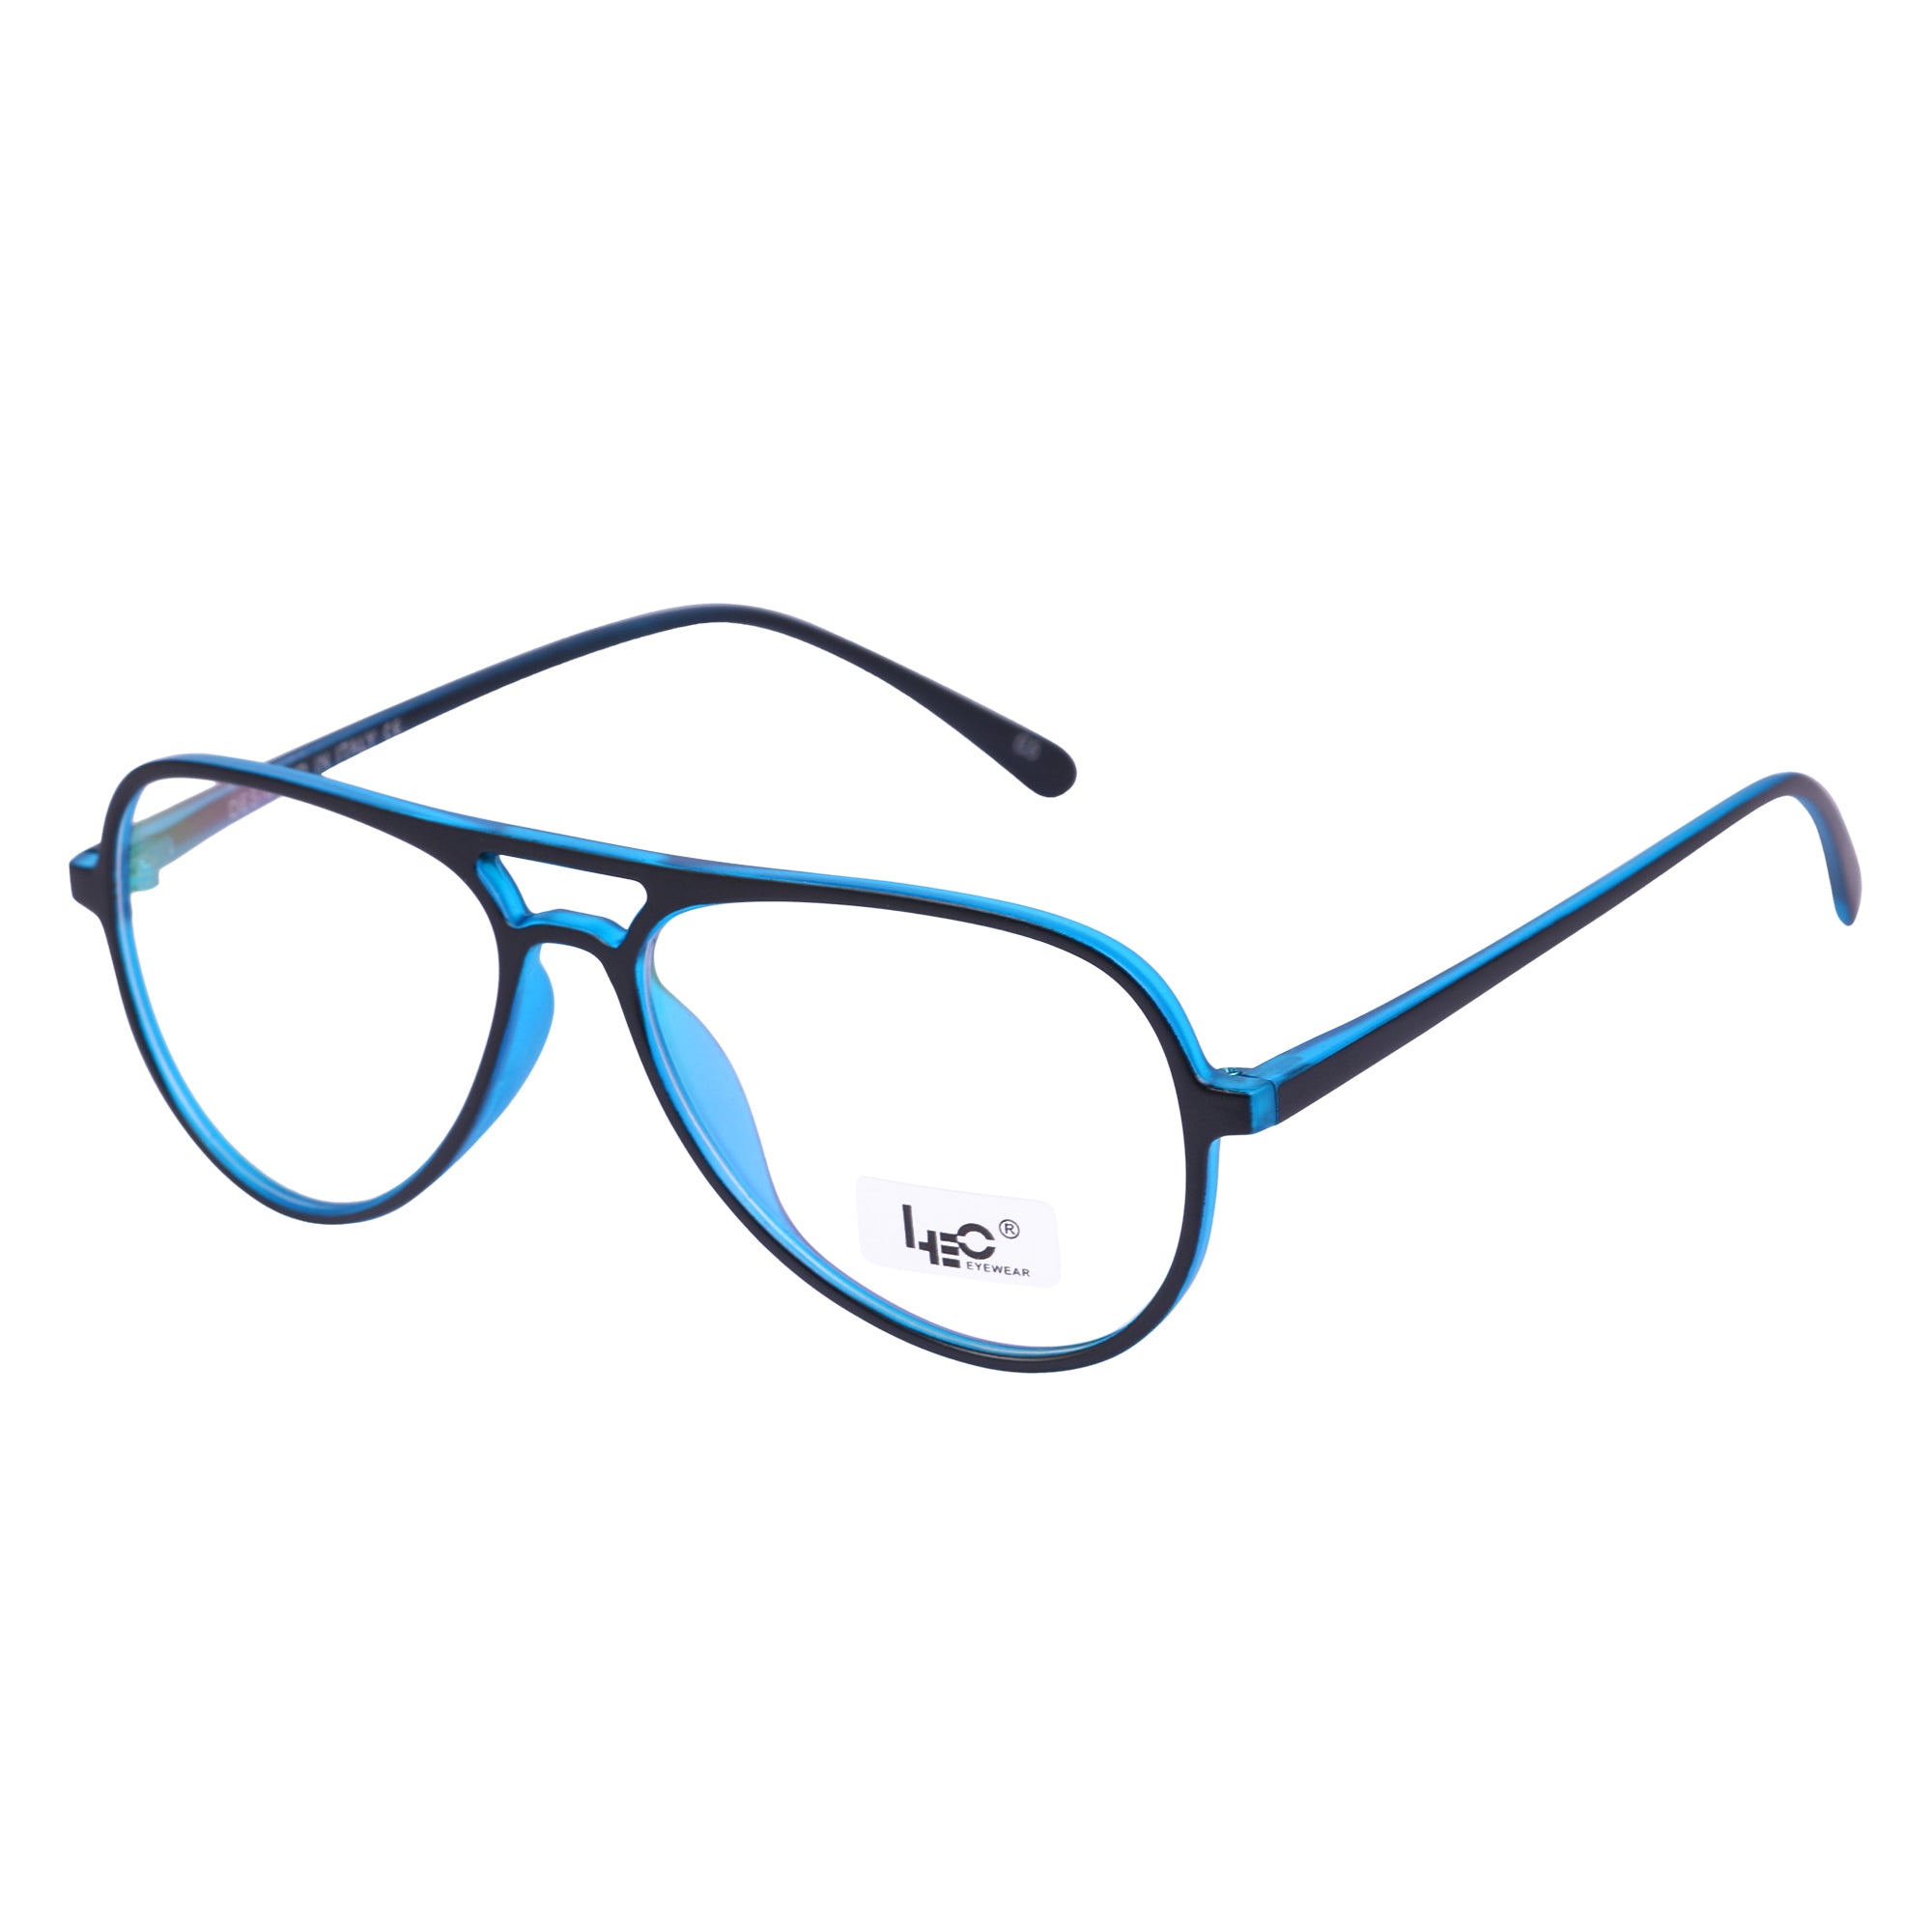 Black & Blue Rimmed Aviator Eyeglasses - L2788-C4